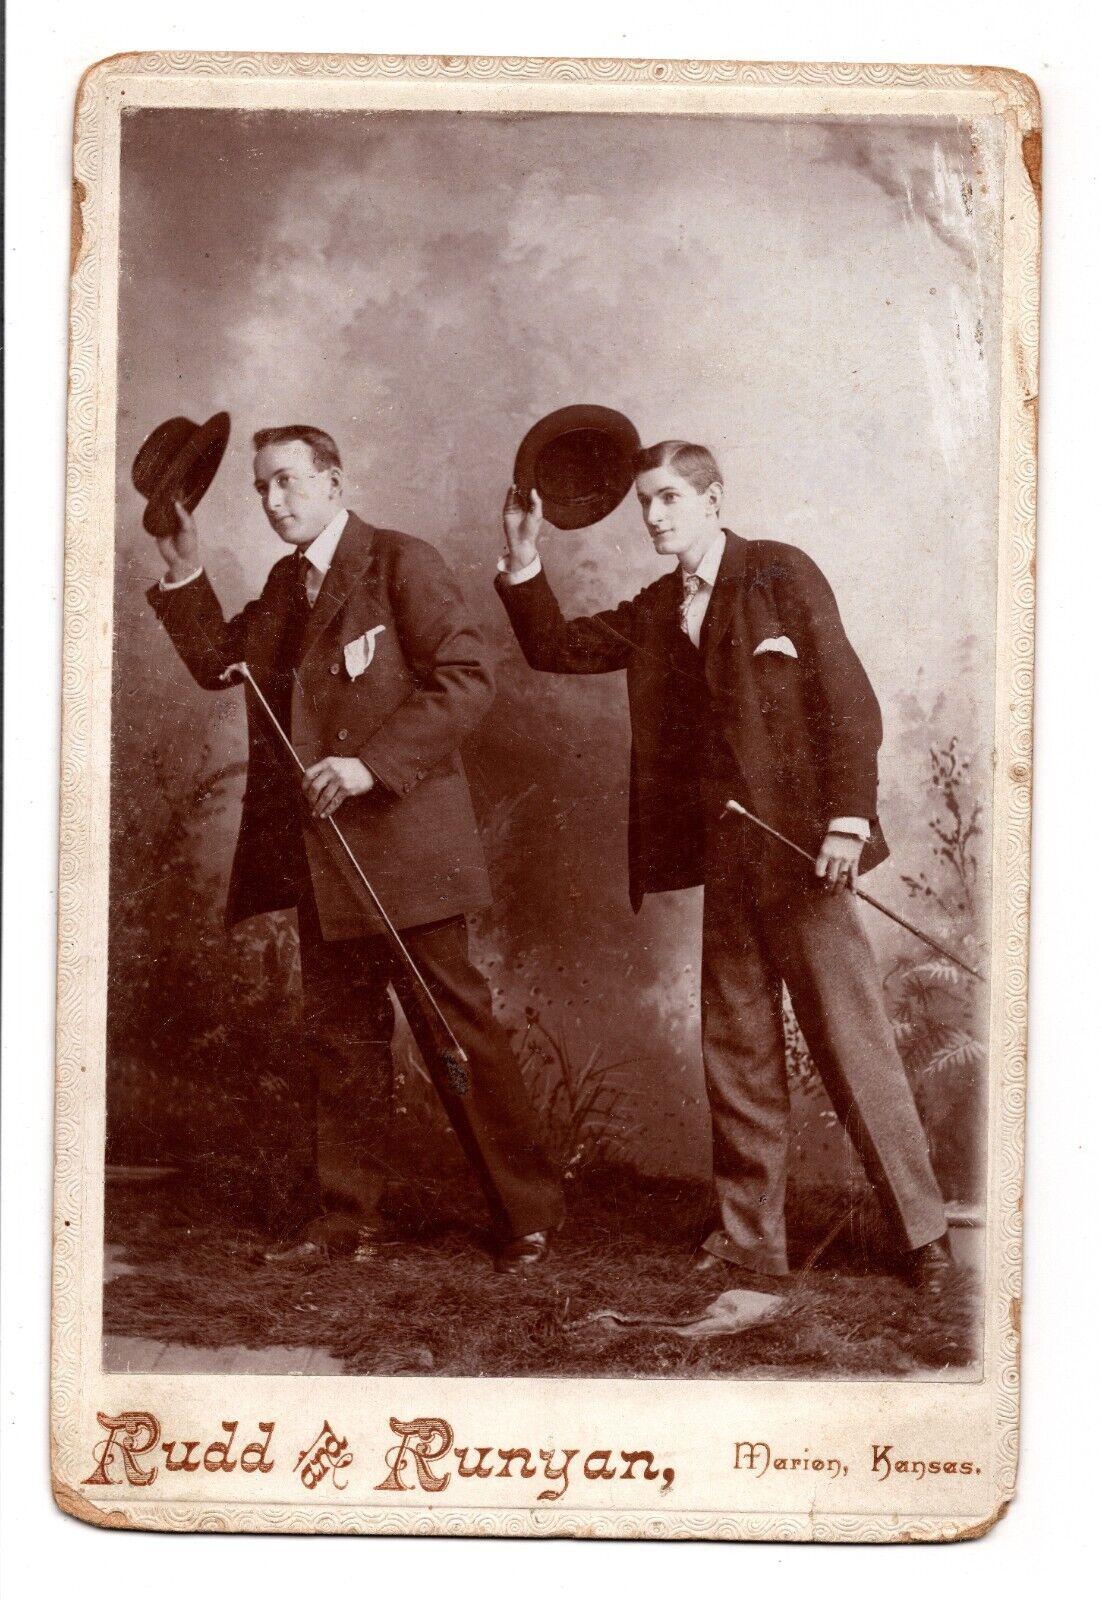 CIRCA 1890s CABINET CARD RUDD & RUNYAN HANDSOME MEN TIPPING HATS MARION KANSAS